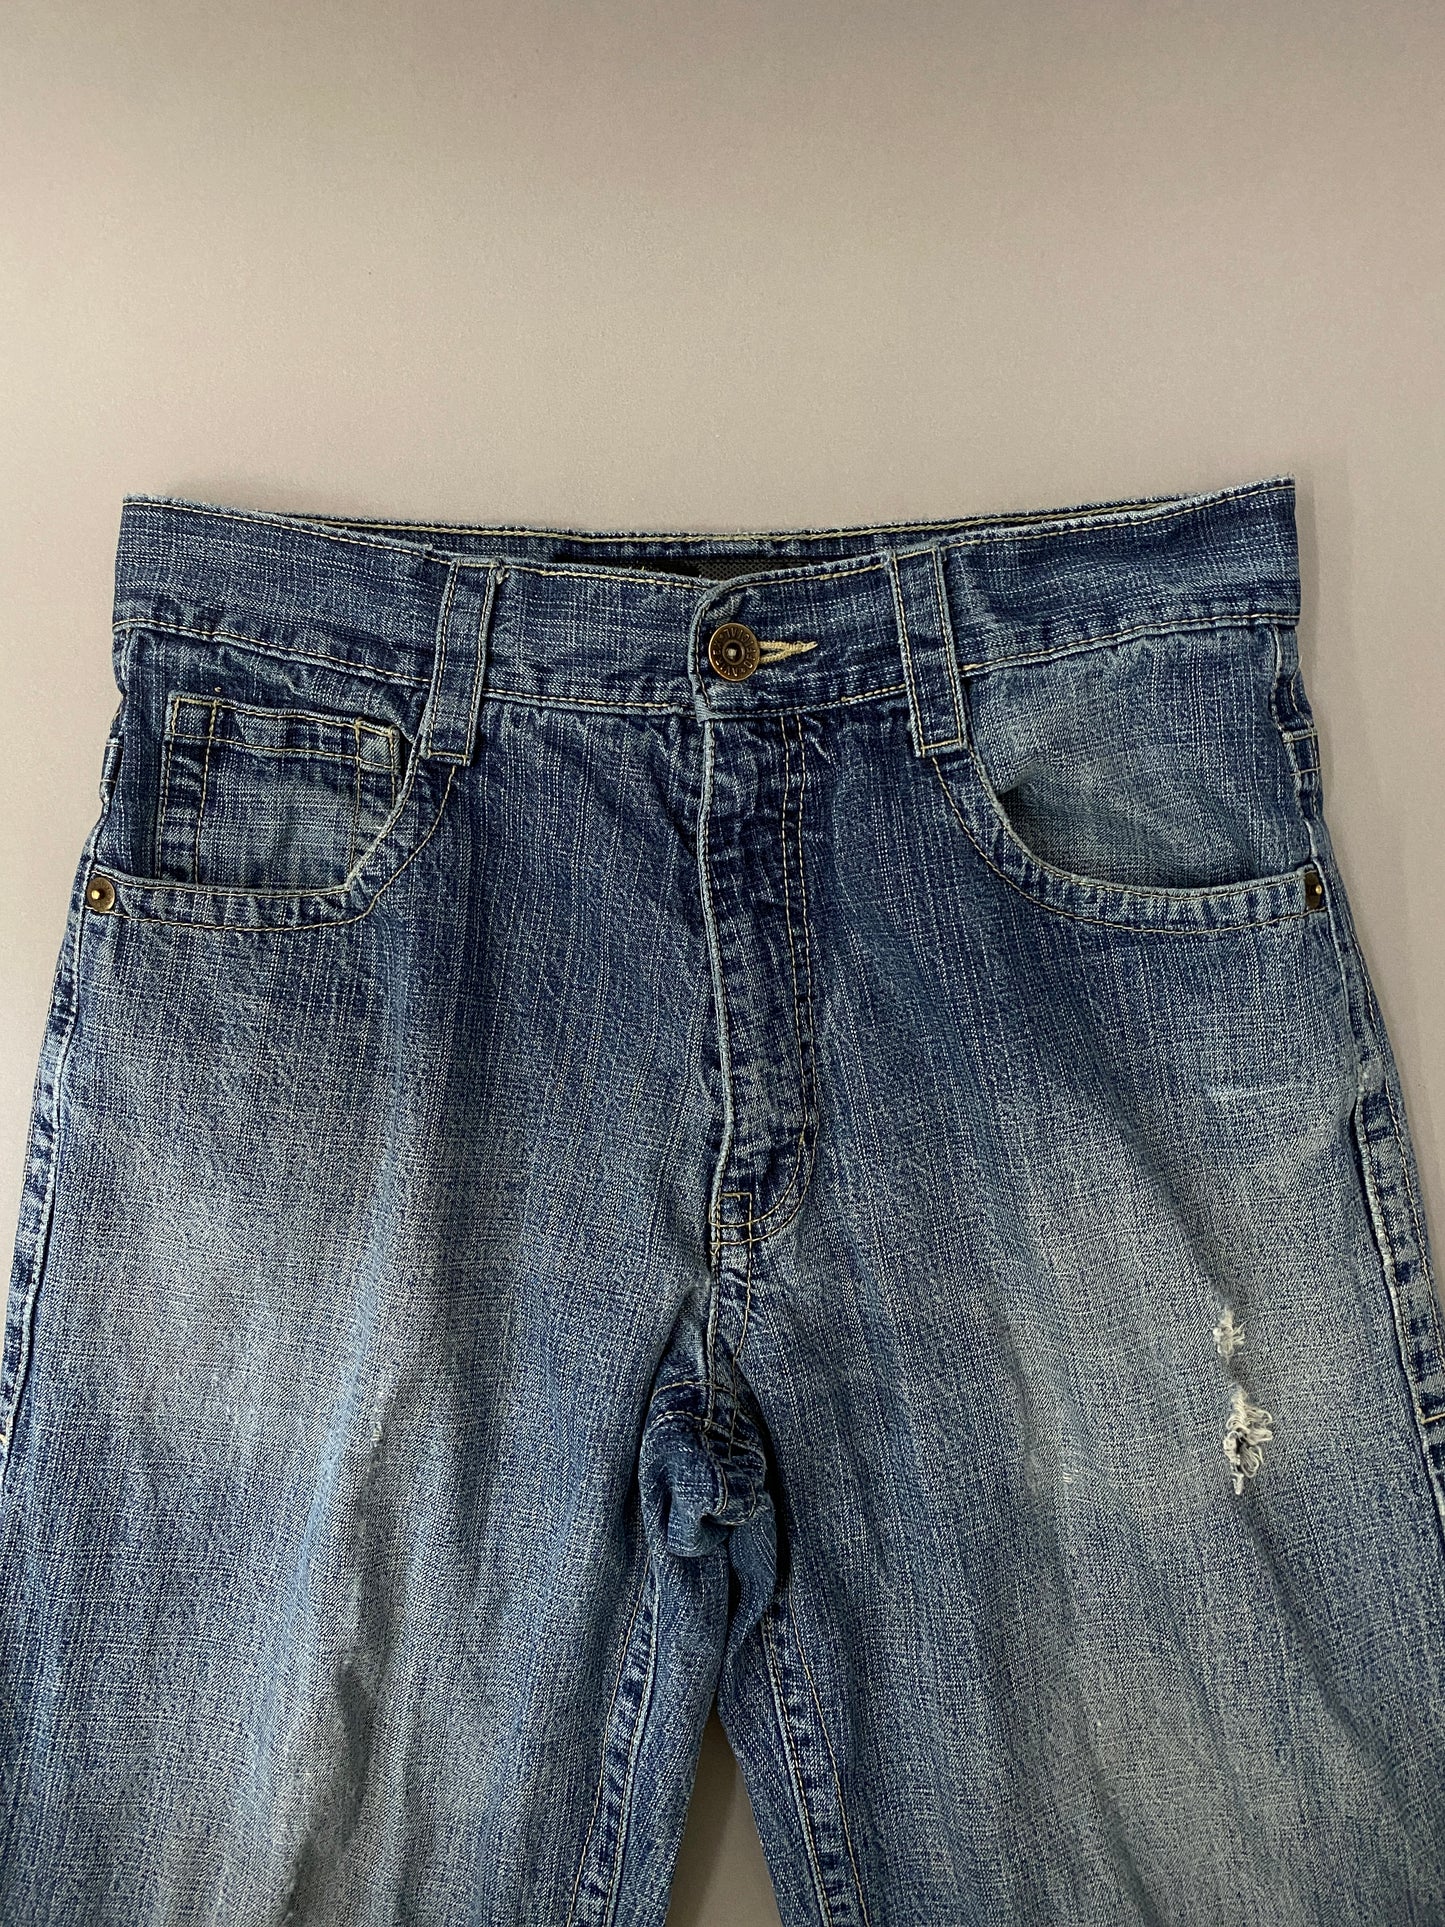 Avirex 90's Jeans - 32x30